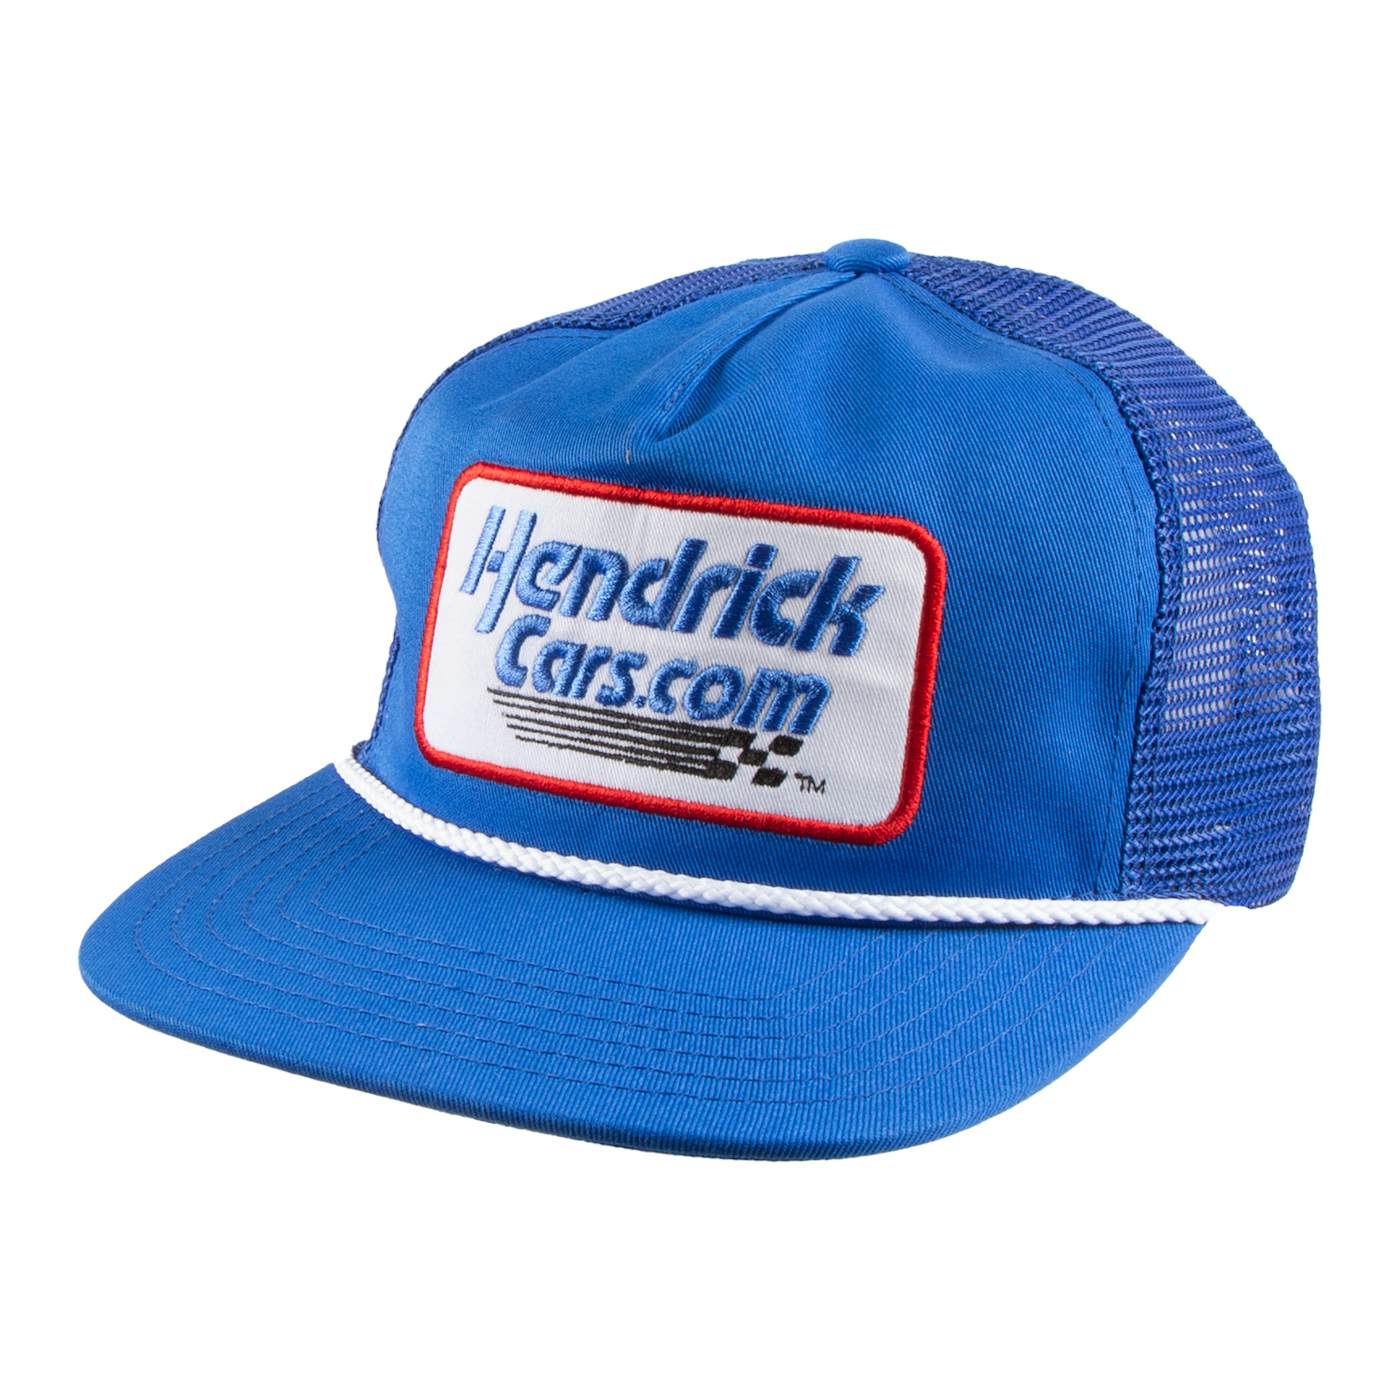 Hendrick Motorsports Kyle Larson #5 HendrickCars.com Rope Hat